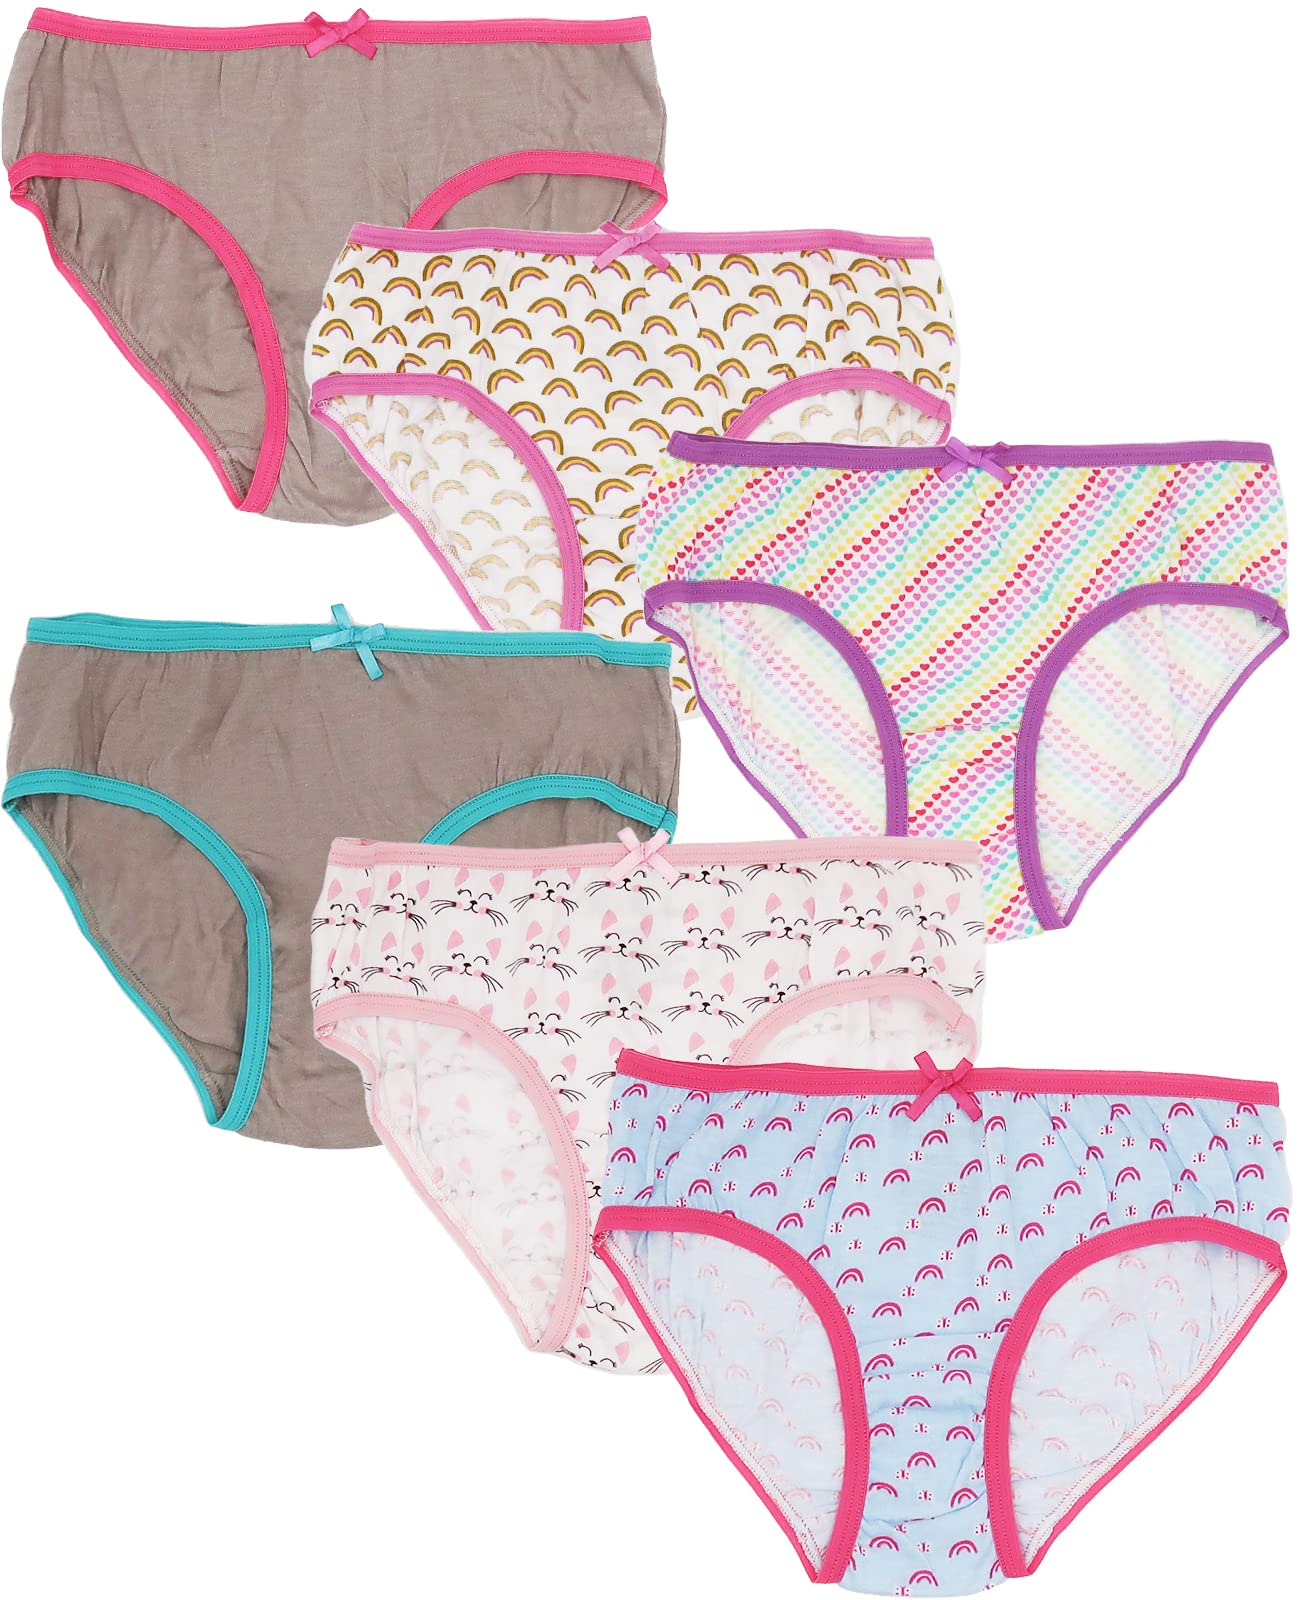  6 Pack Ladies Thongs Cotton Underwear Lingerie Soft